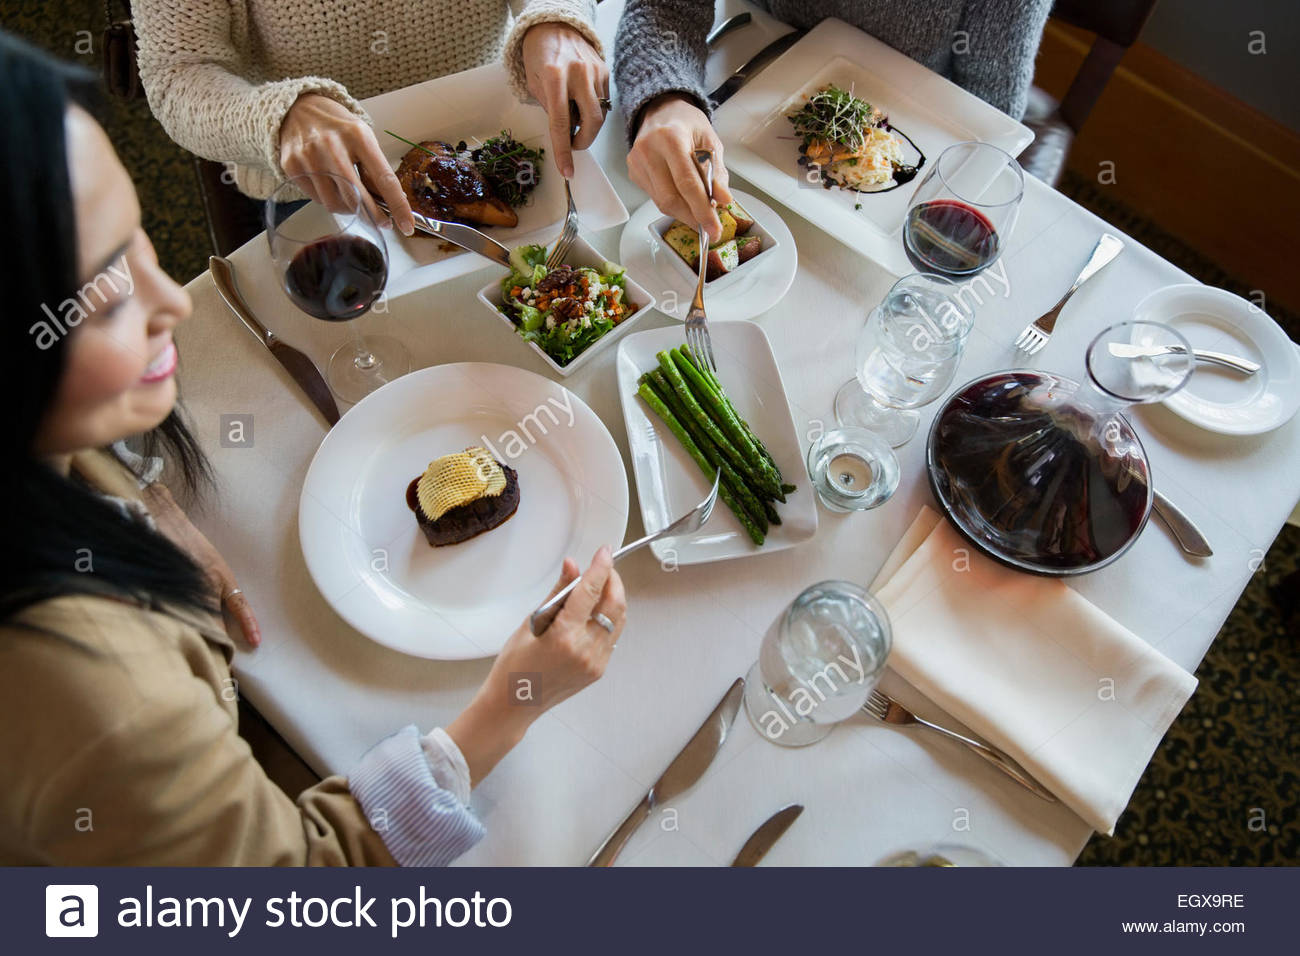 Women sharing asparagus at restaurant table Stock Photo